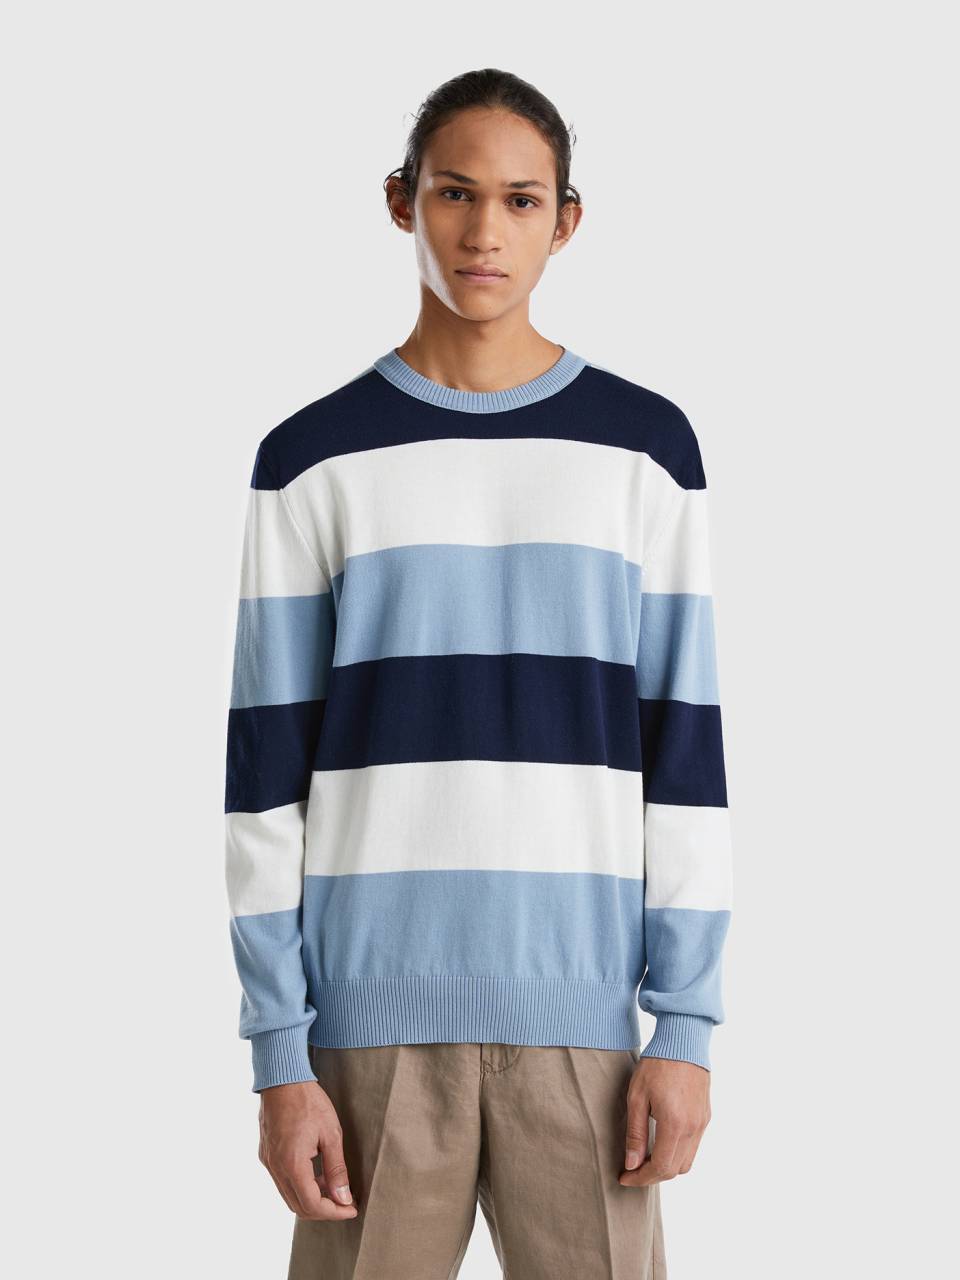 Benetton striped 100% cotton sweater. 1